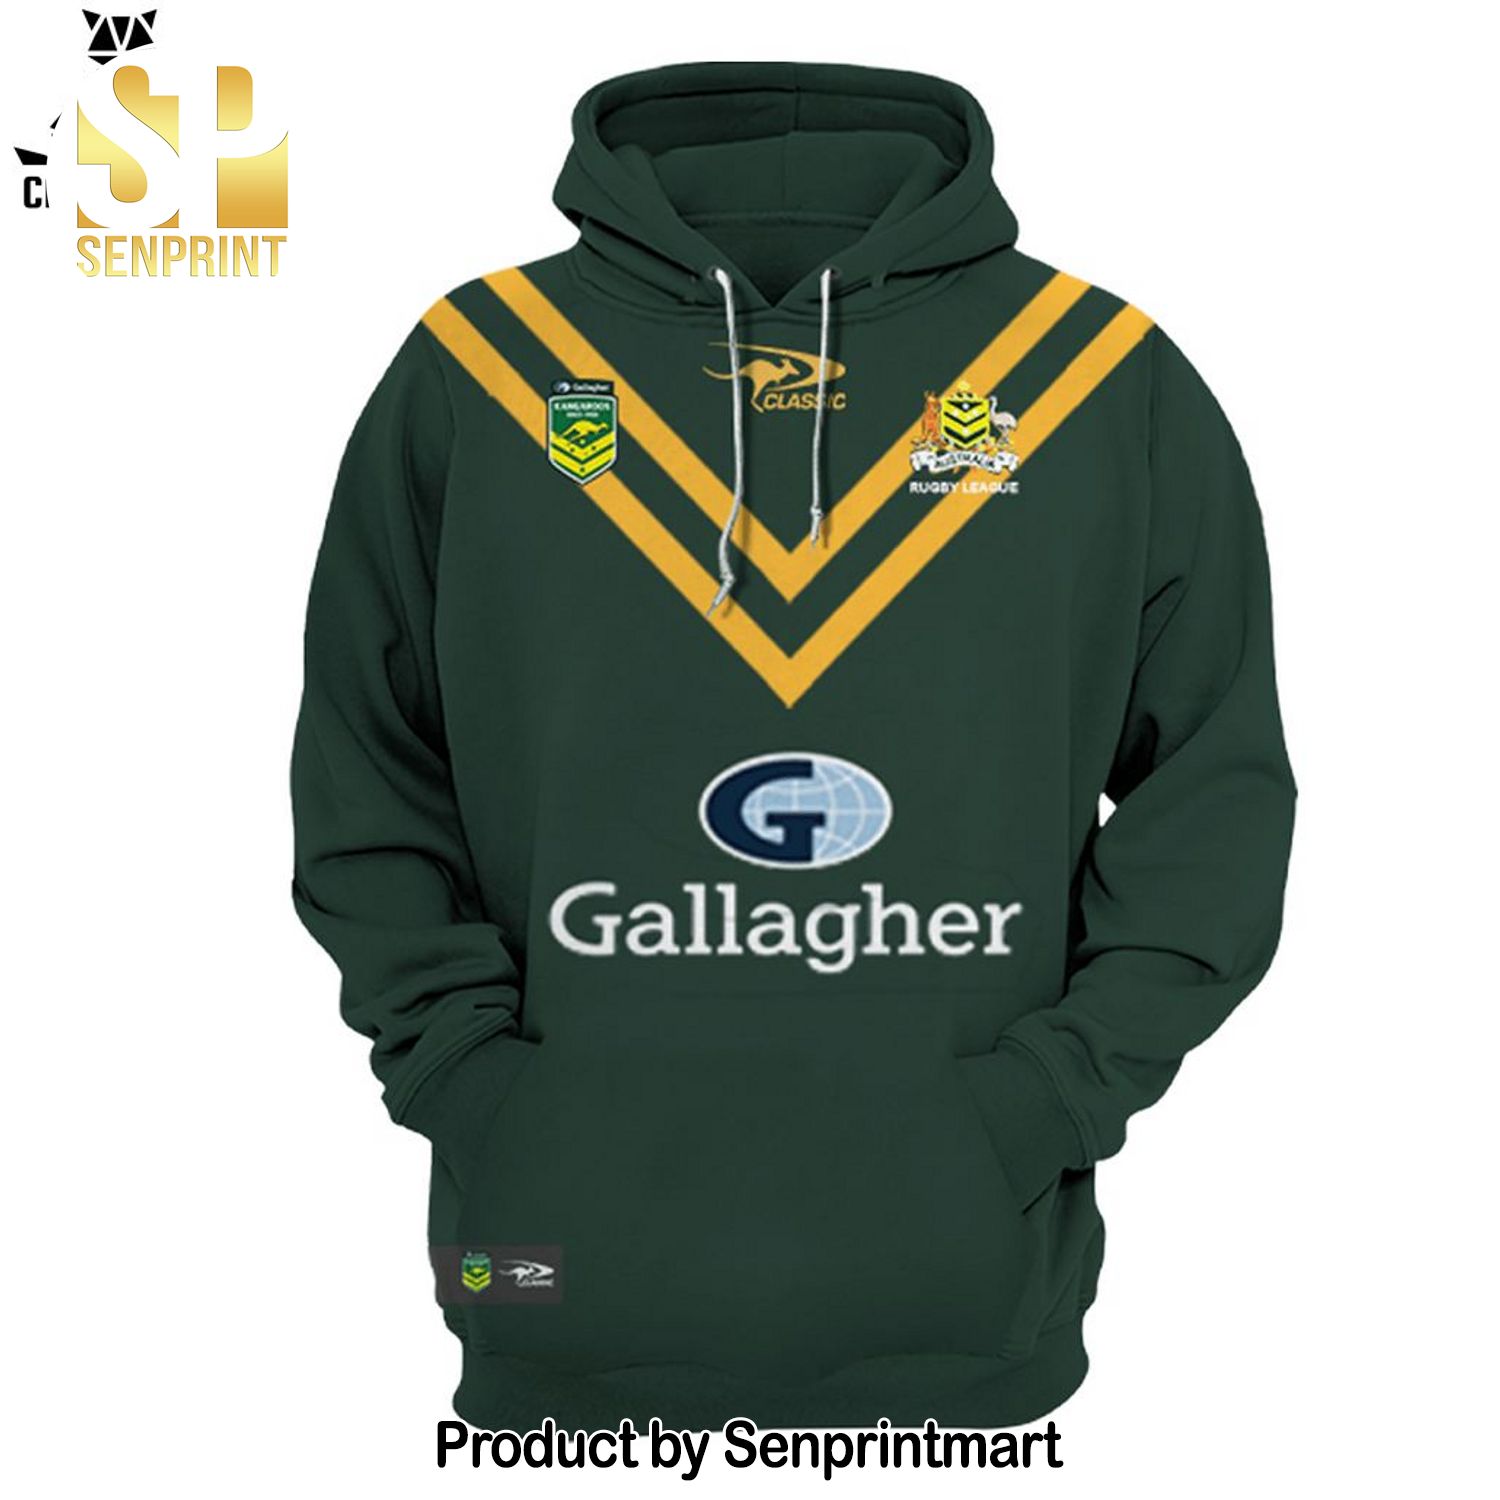 Australian Kangaroos Since 1908 Pacific Rugby League Championships Green Design Full Printing Shirt